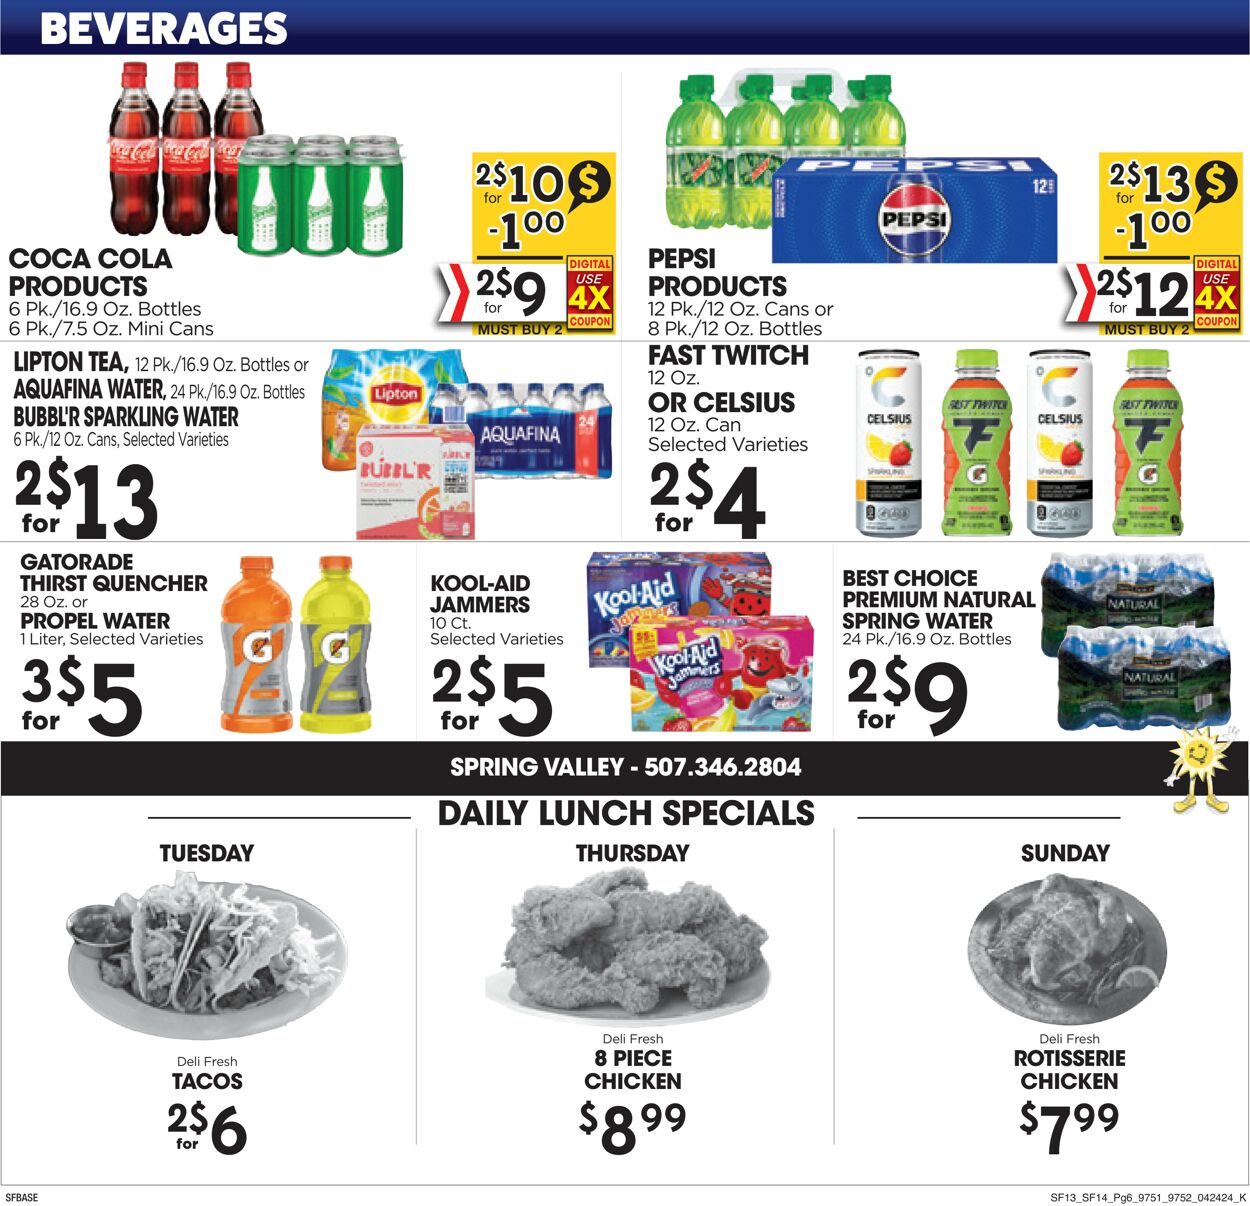 Weekly ad Sunshine Foods 04/24/2024 - 04/30/2024